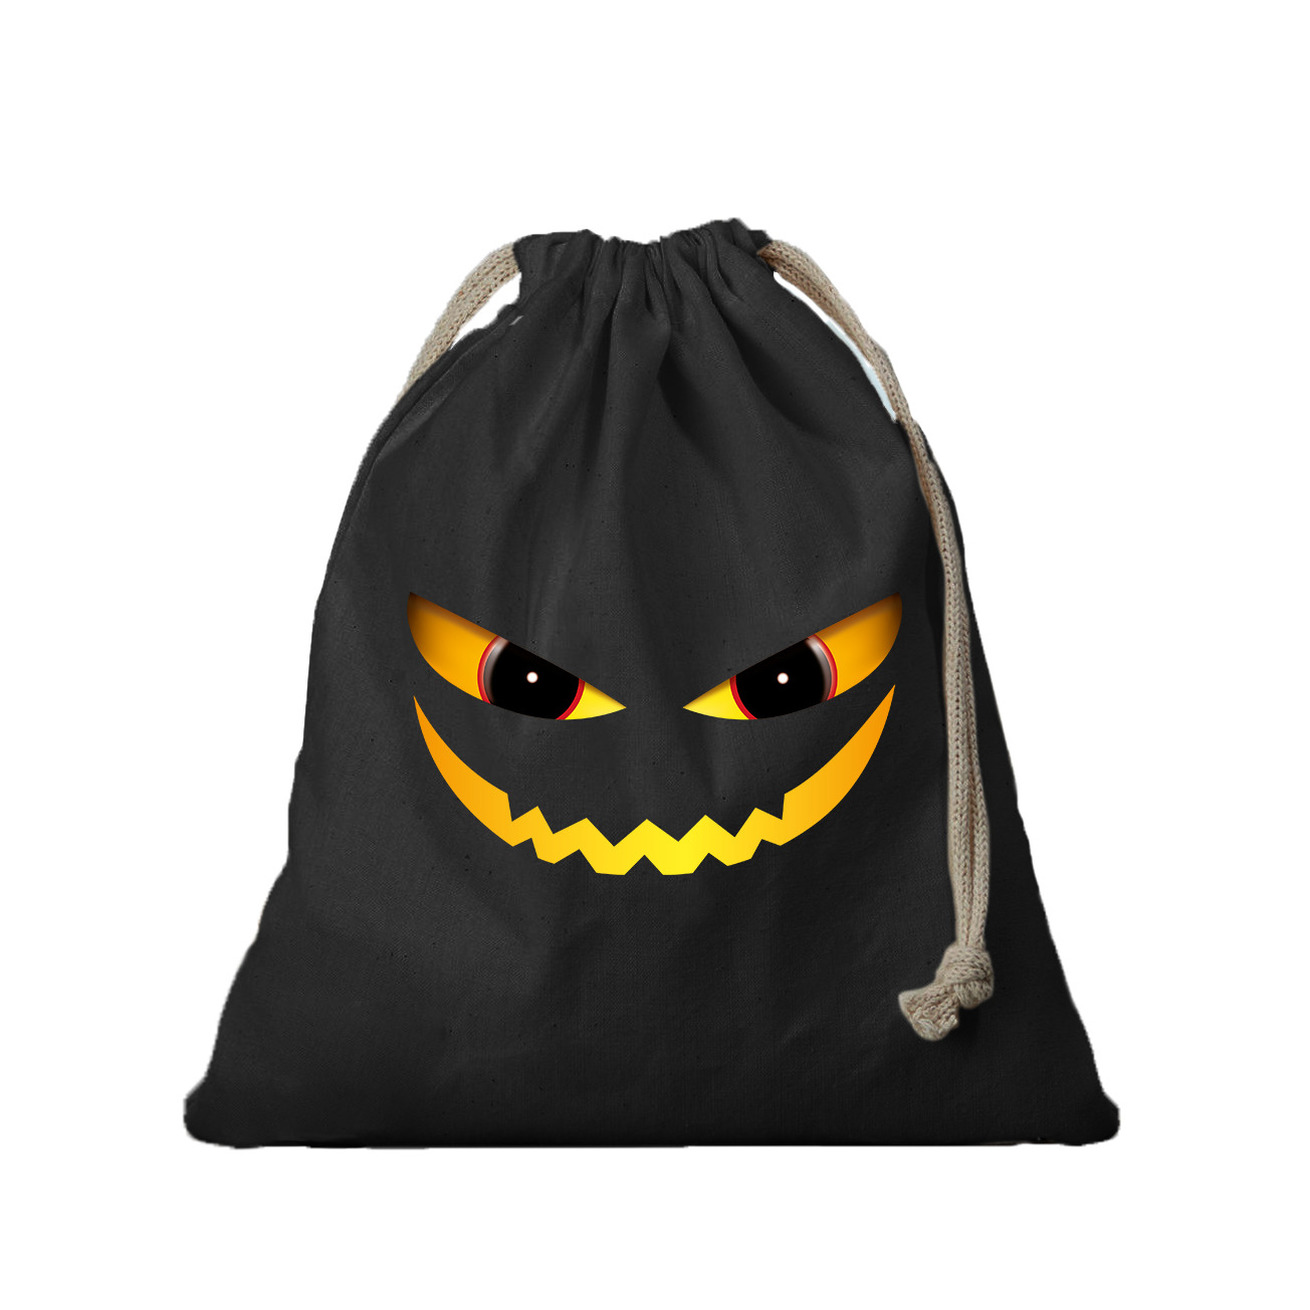 3x Katoenen Halloween snoep tasje duivel gezicht zwart 25 x 30 cm